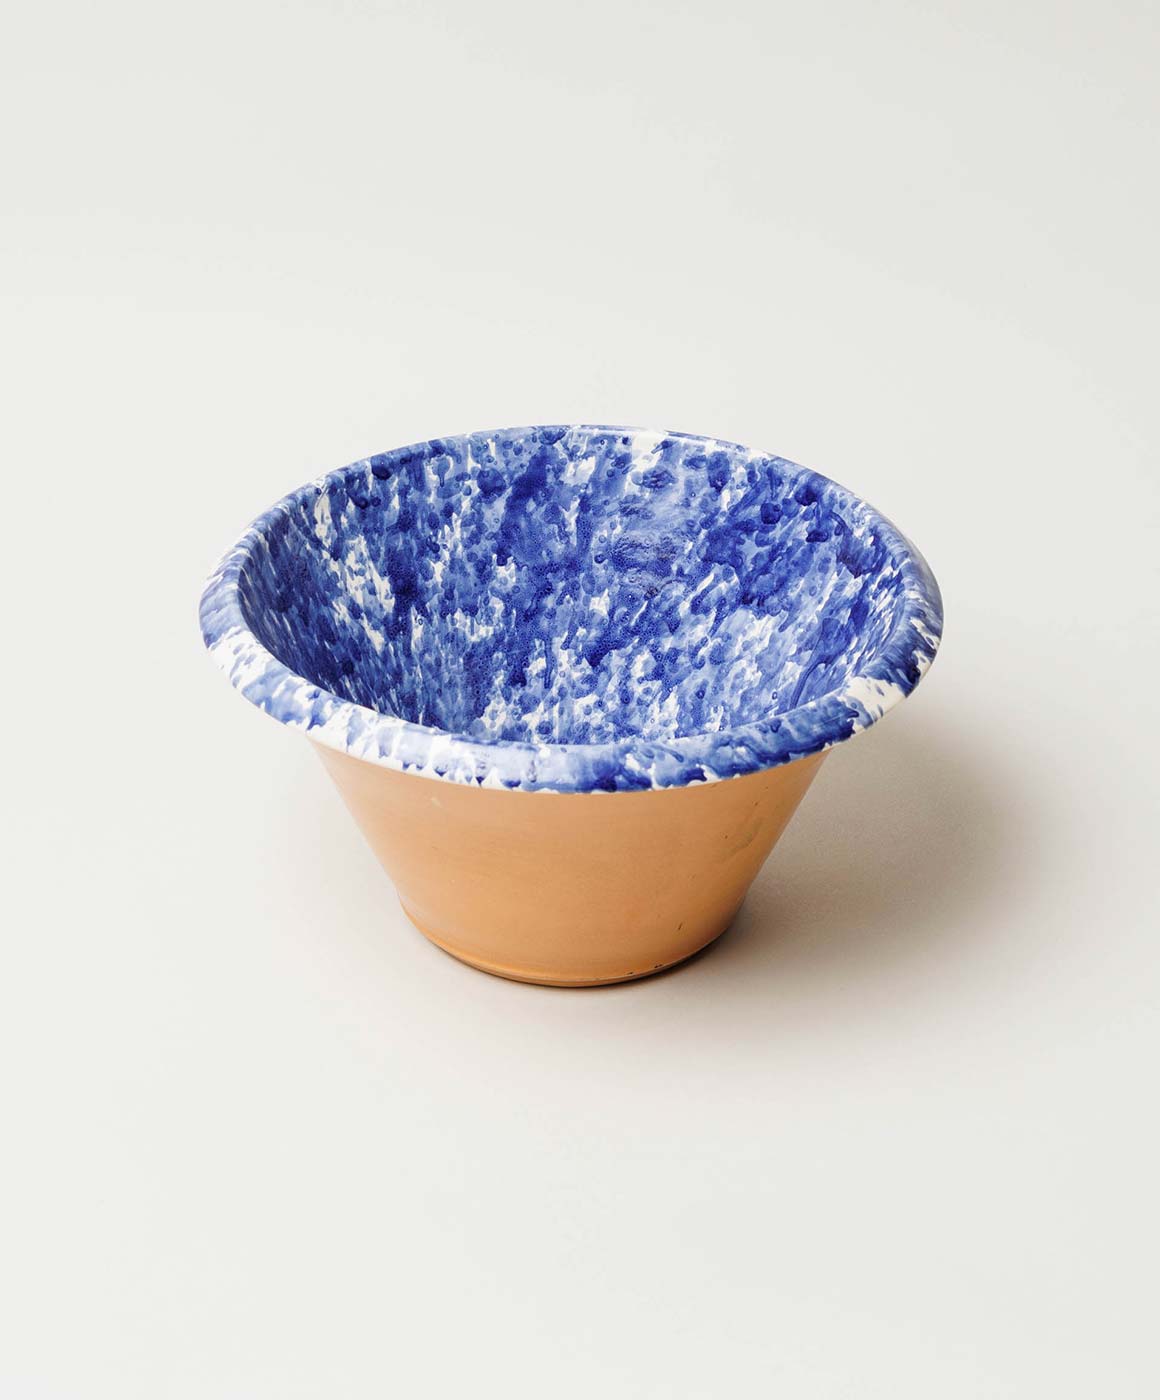   Blue Splatterware Mixing Bowl  